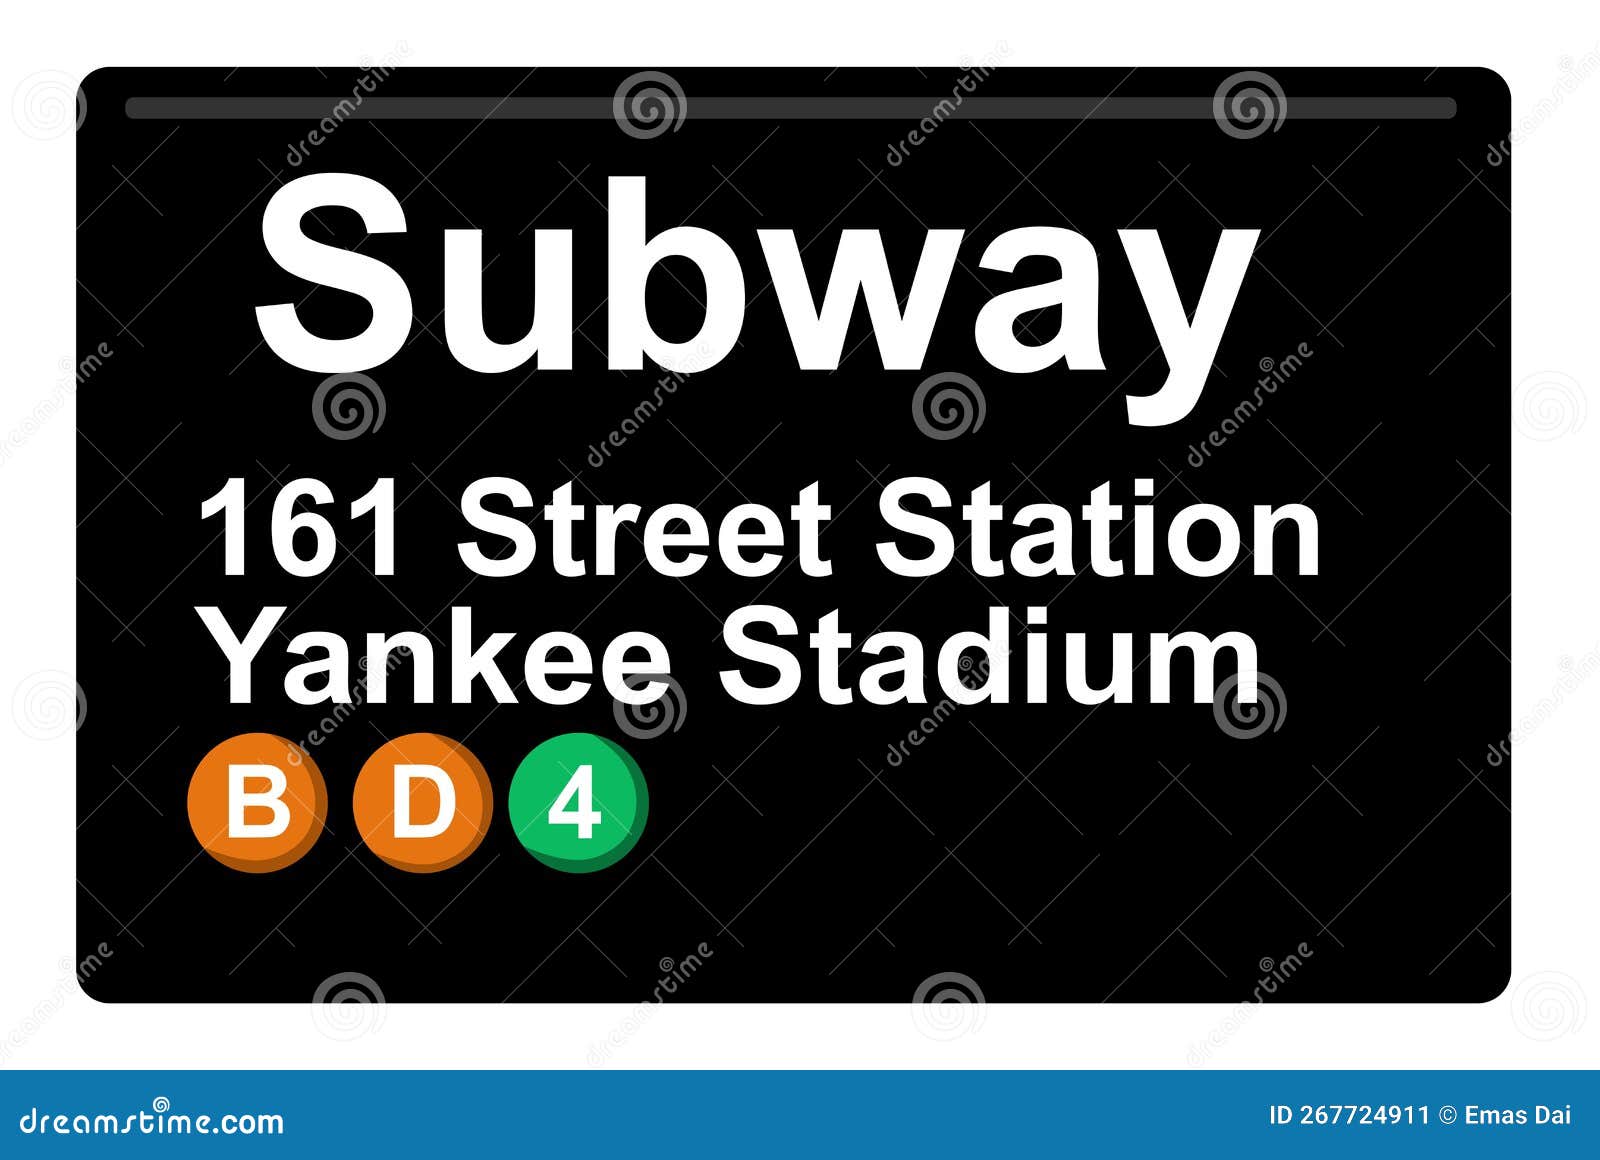 subway 161 streeet station yankee stadium